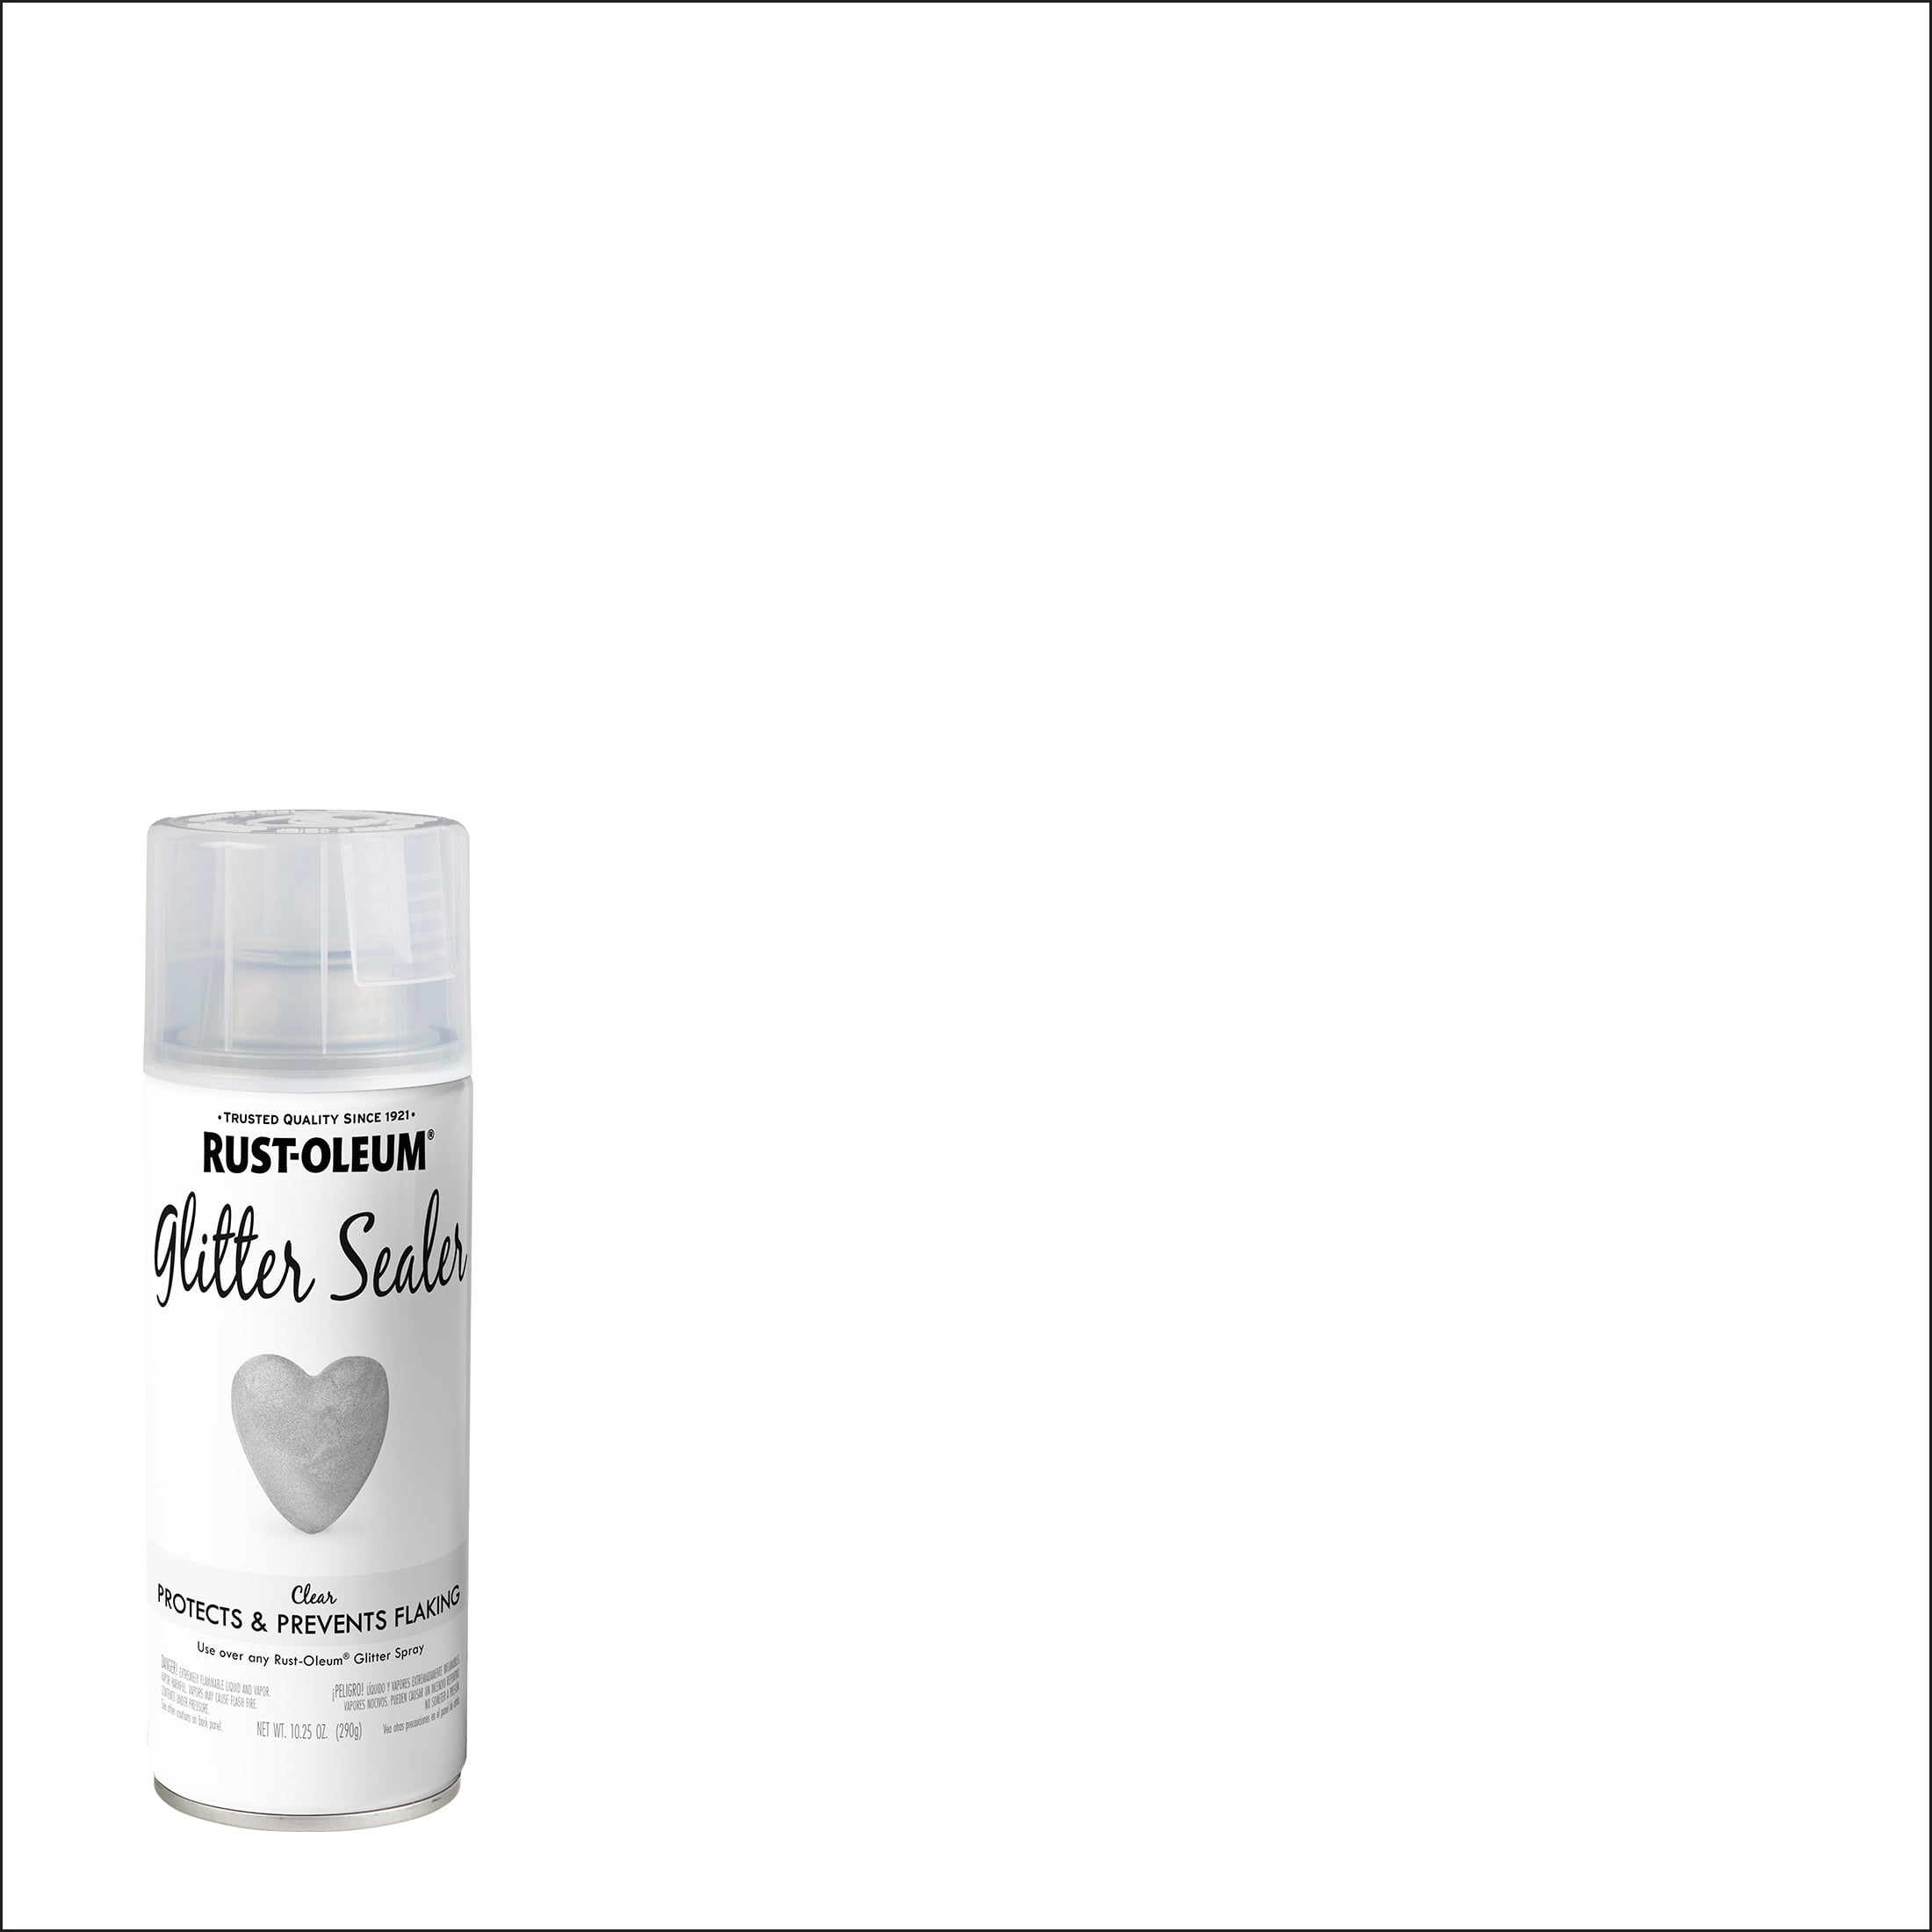 Rust-Oleum 301814 Specialty Glitter Spray Paint, 10.25 oz, Silver